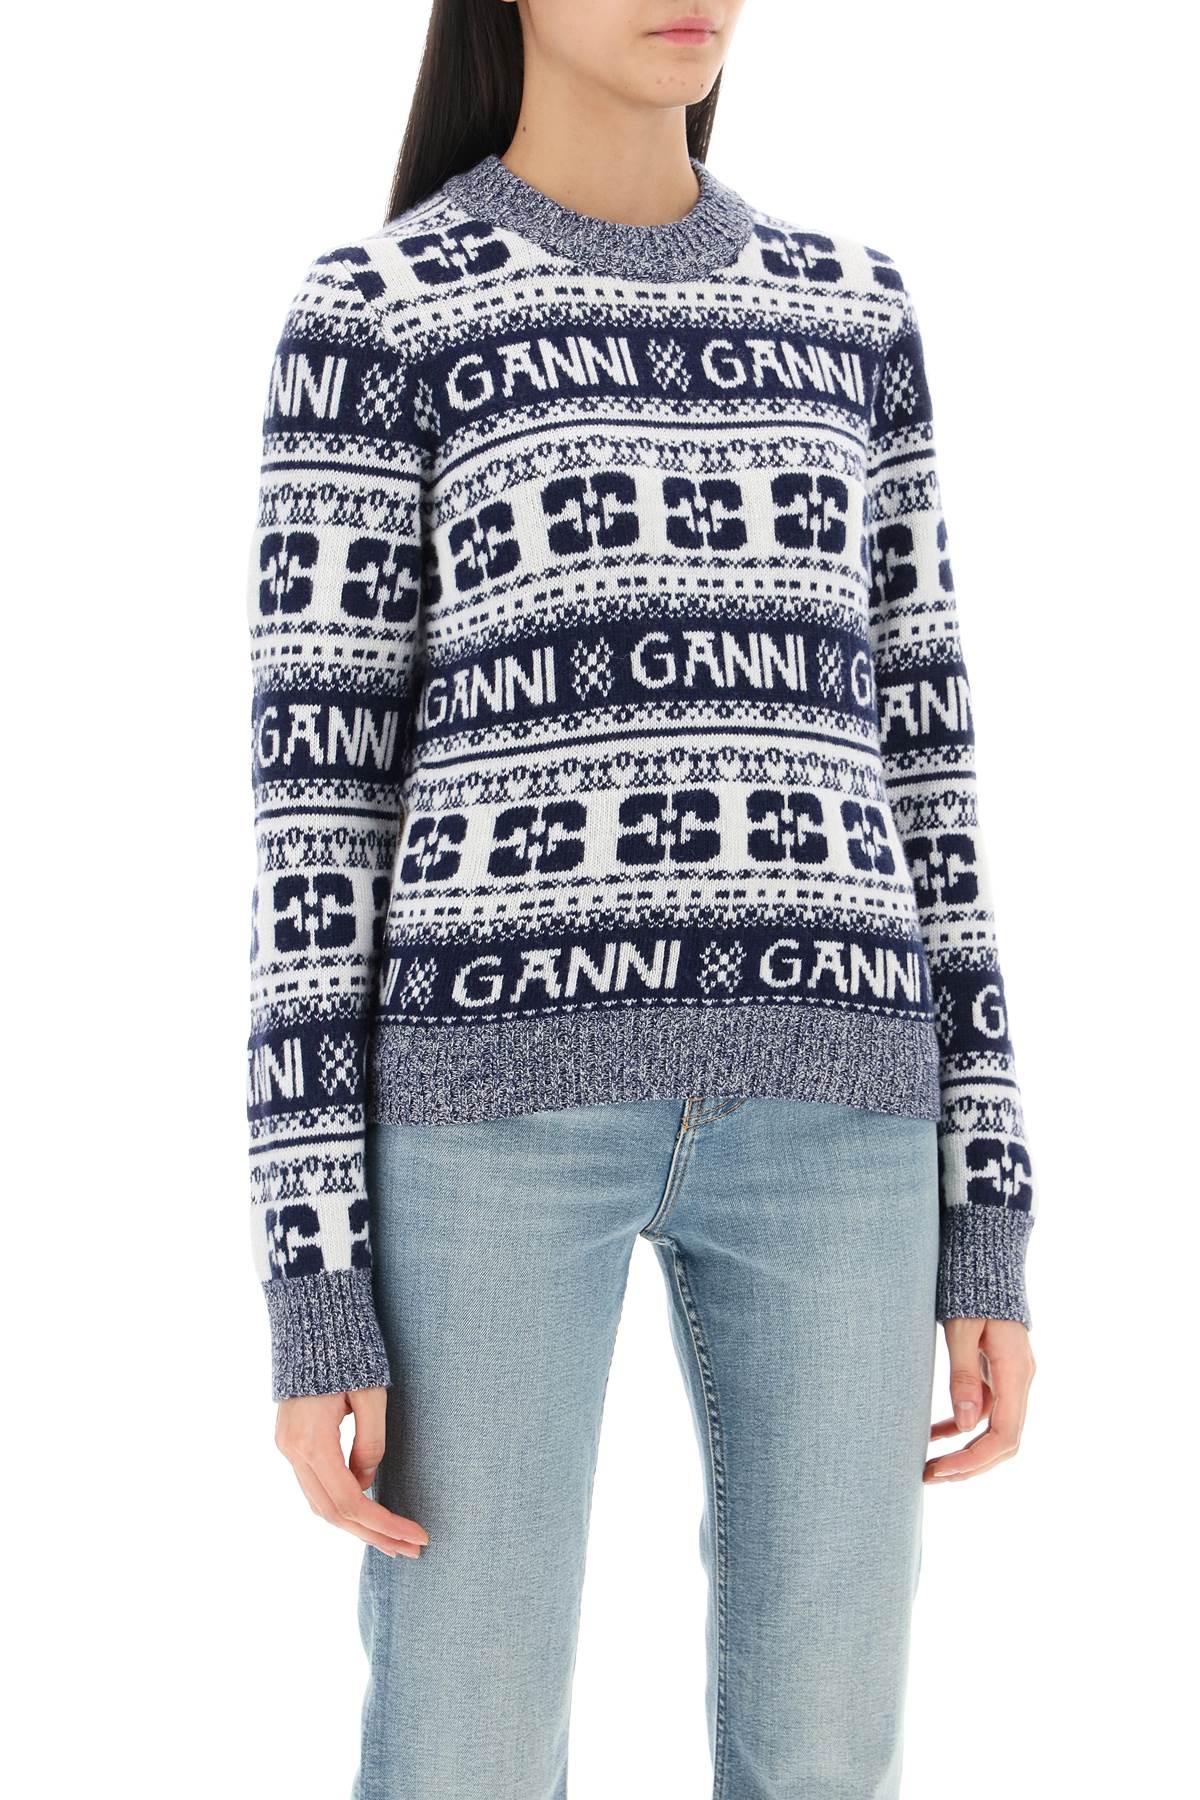 Ganni jacquard wool sweater with logo pattern-1